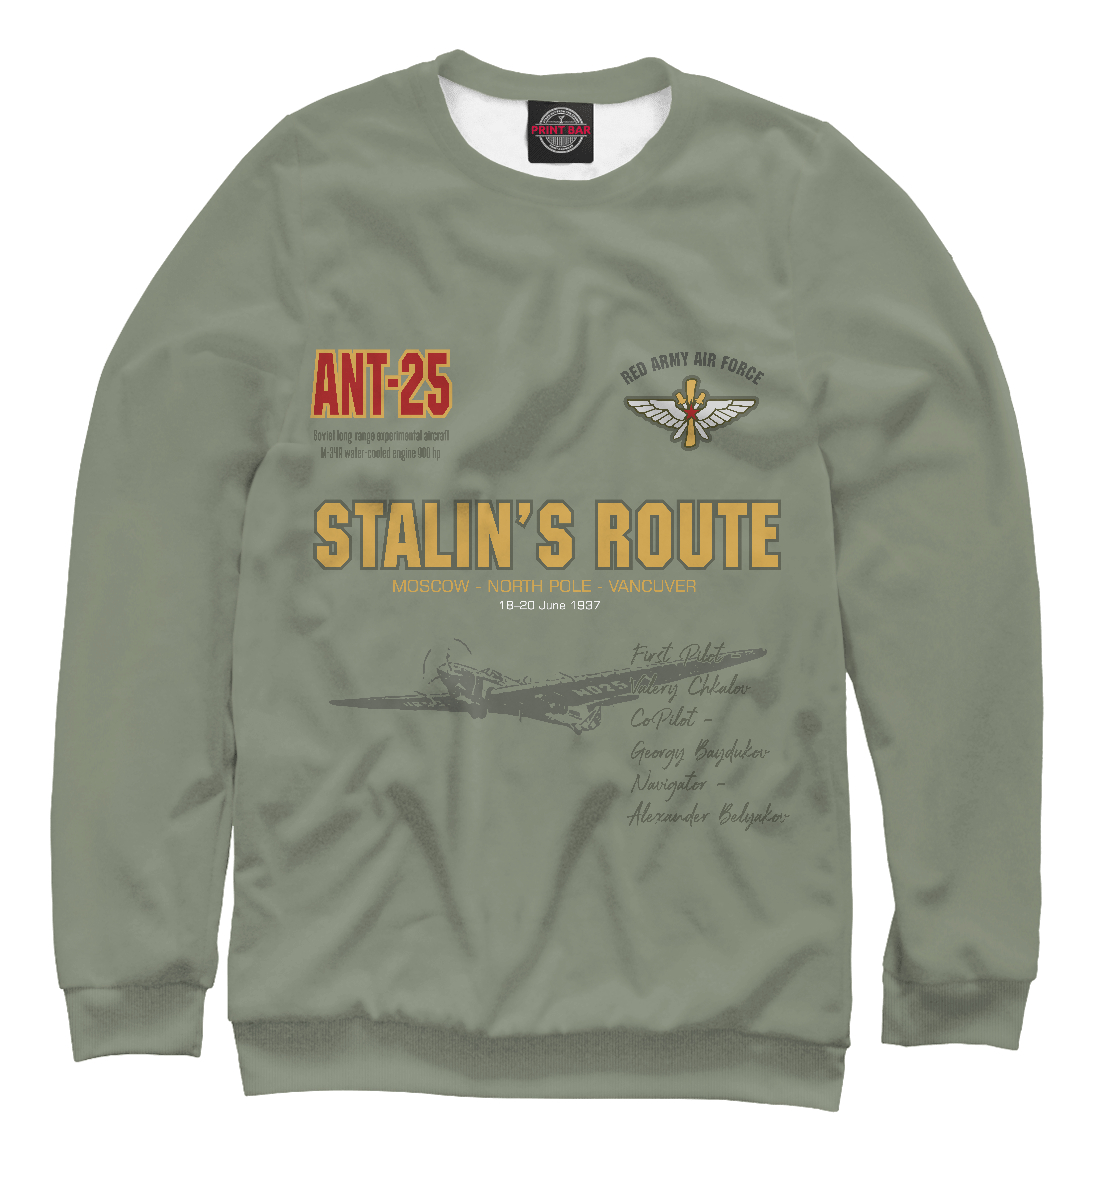 Мужской Свитшот с принтом Сталинский маршрут (Ант-25), артикул VVS-536549-swi-2mp